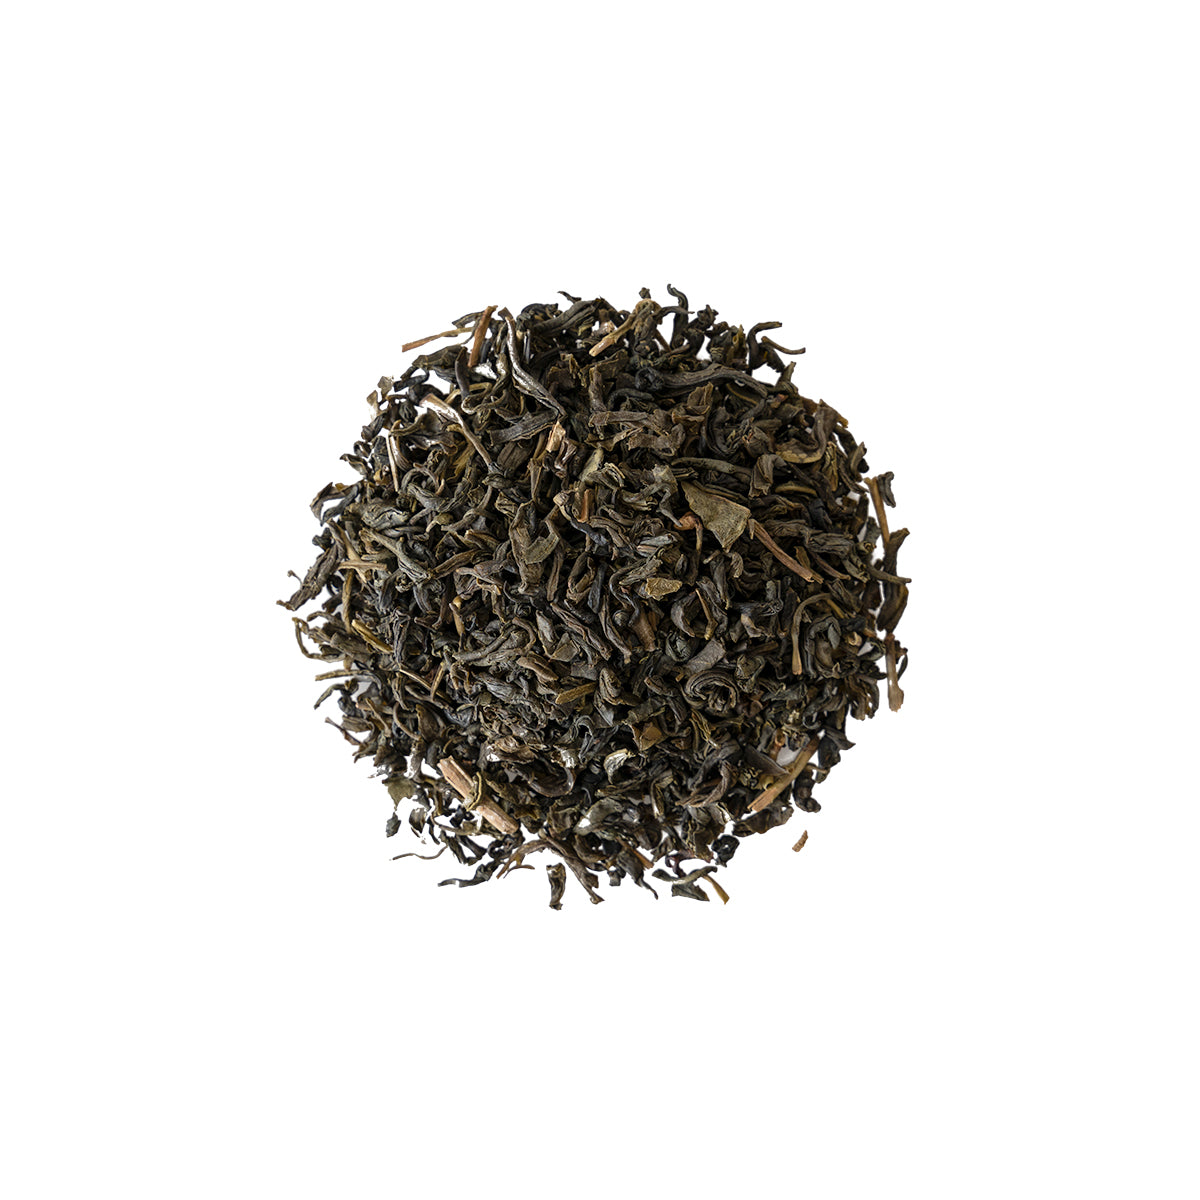 Primary Image of Organic China Wuyuan Jasmine Green Tea